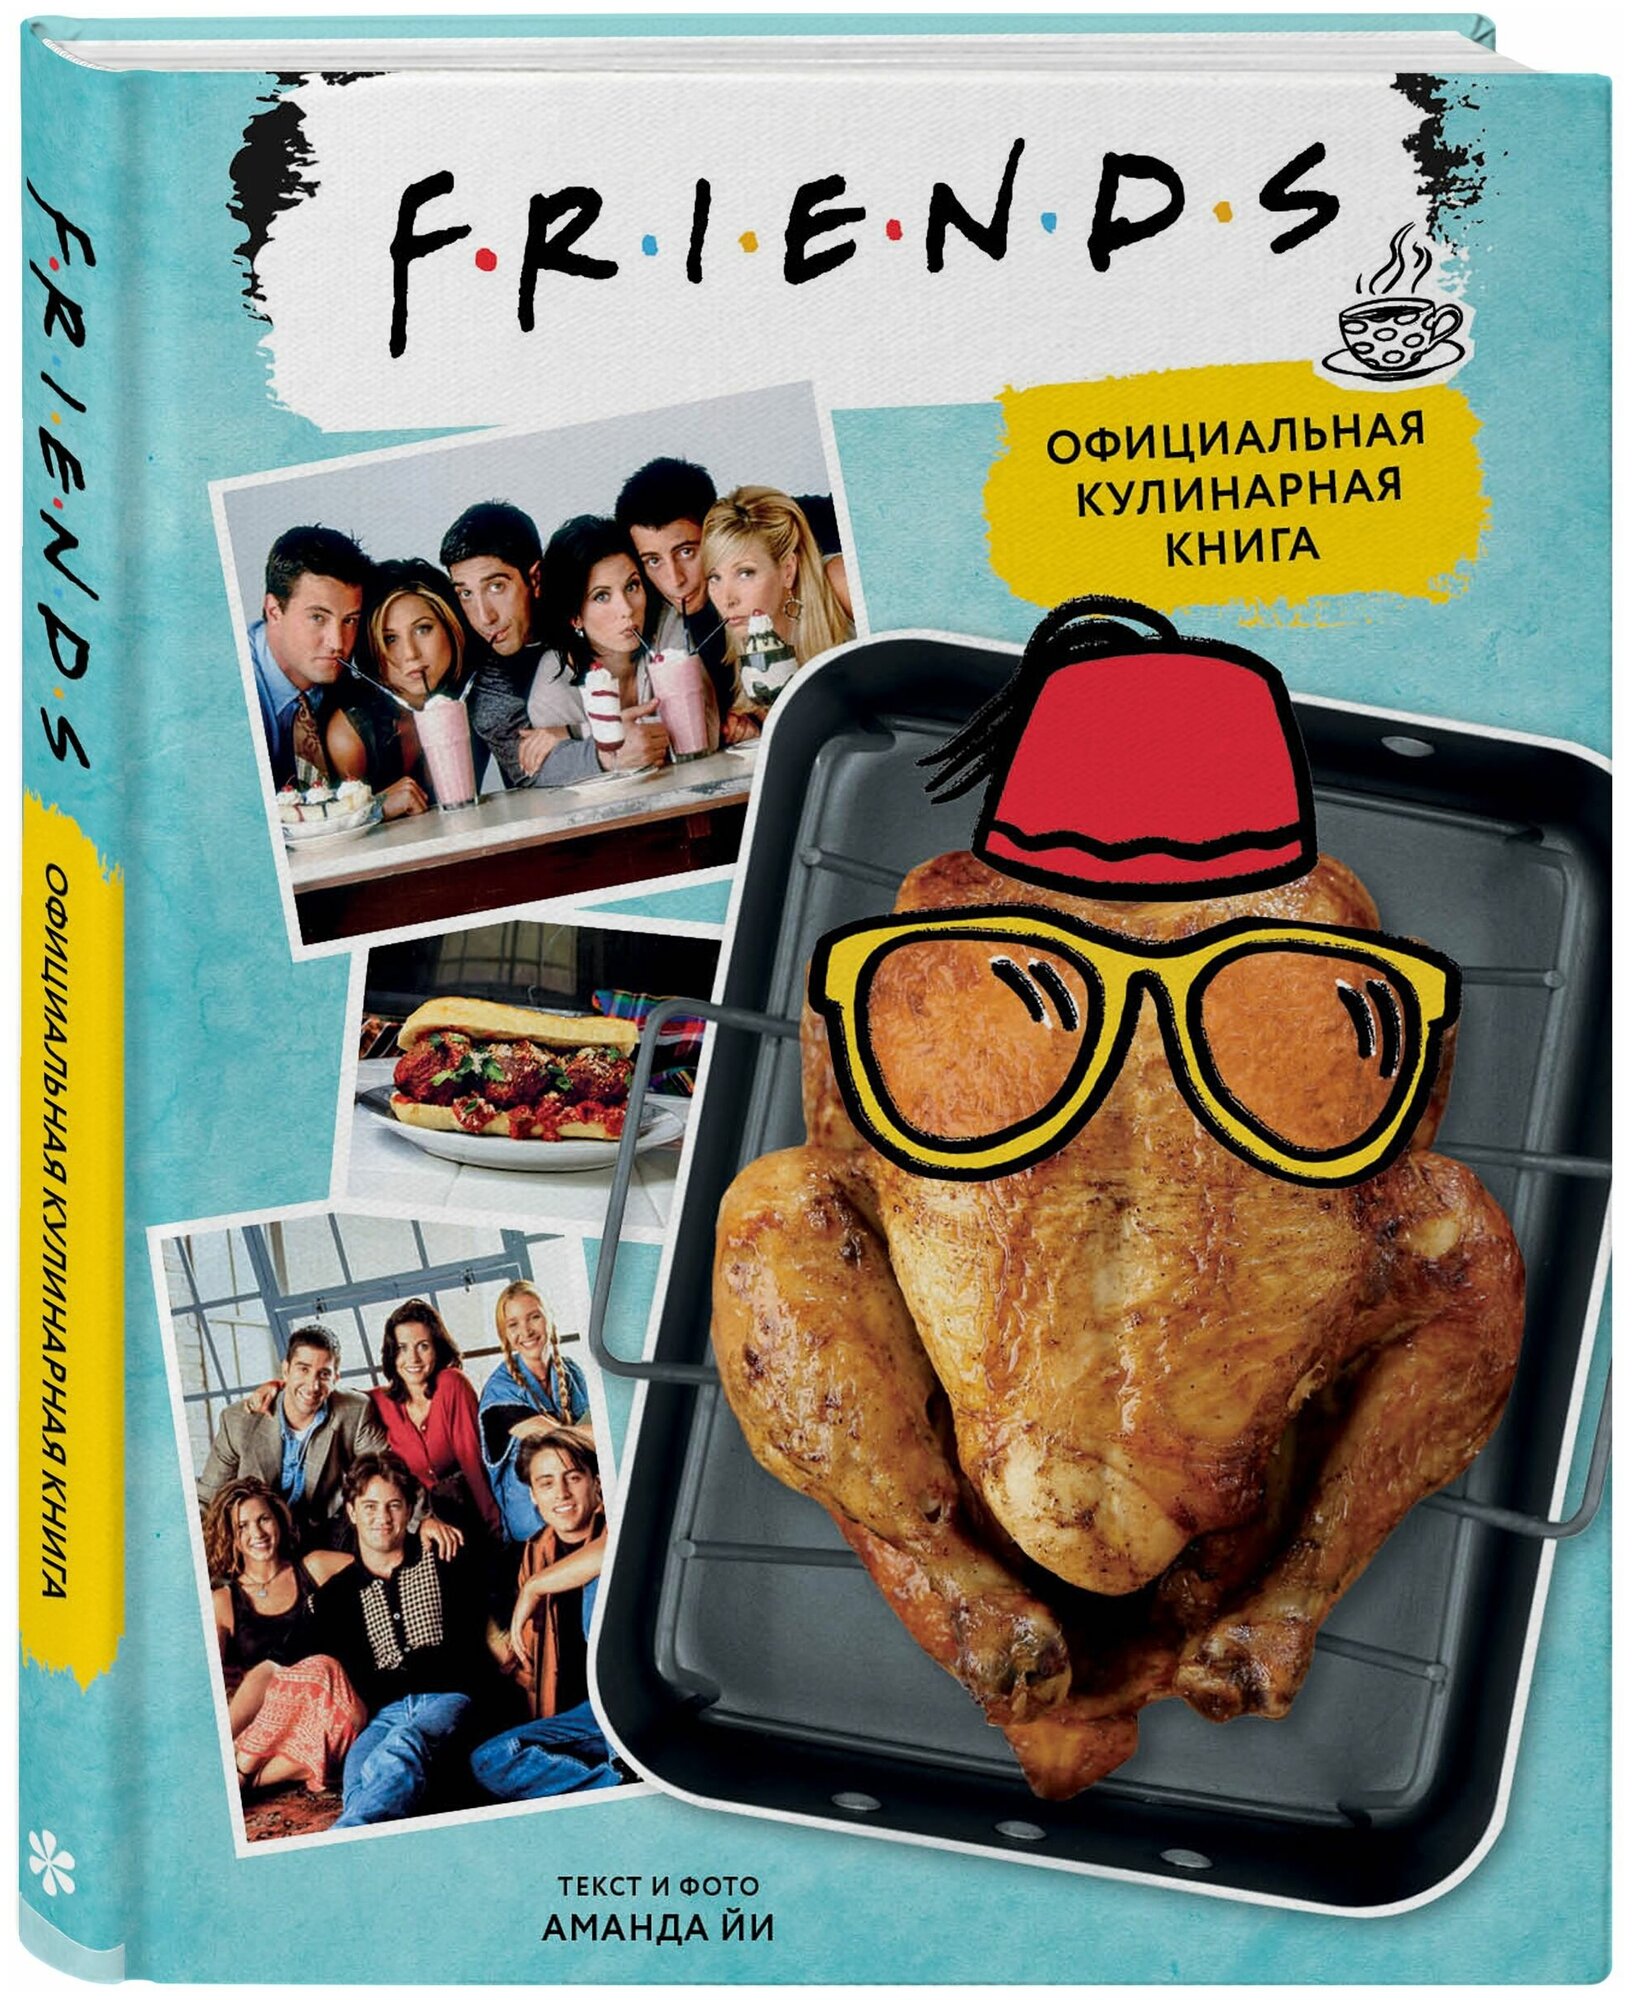 Friends. Официальная кулинарная книга - фото №1